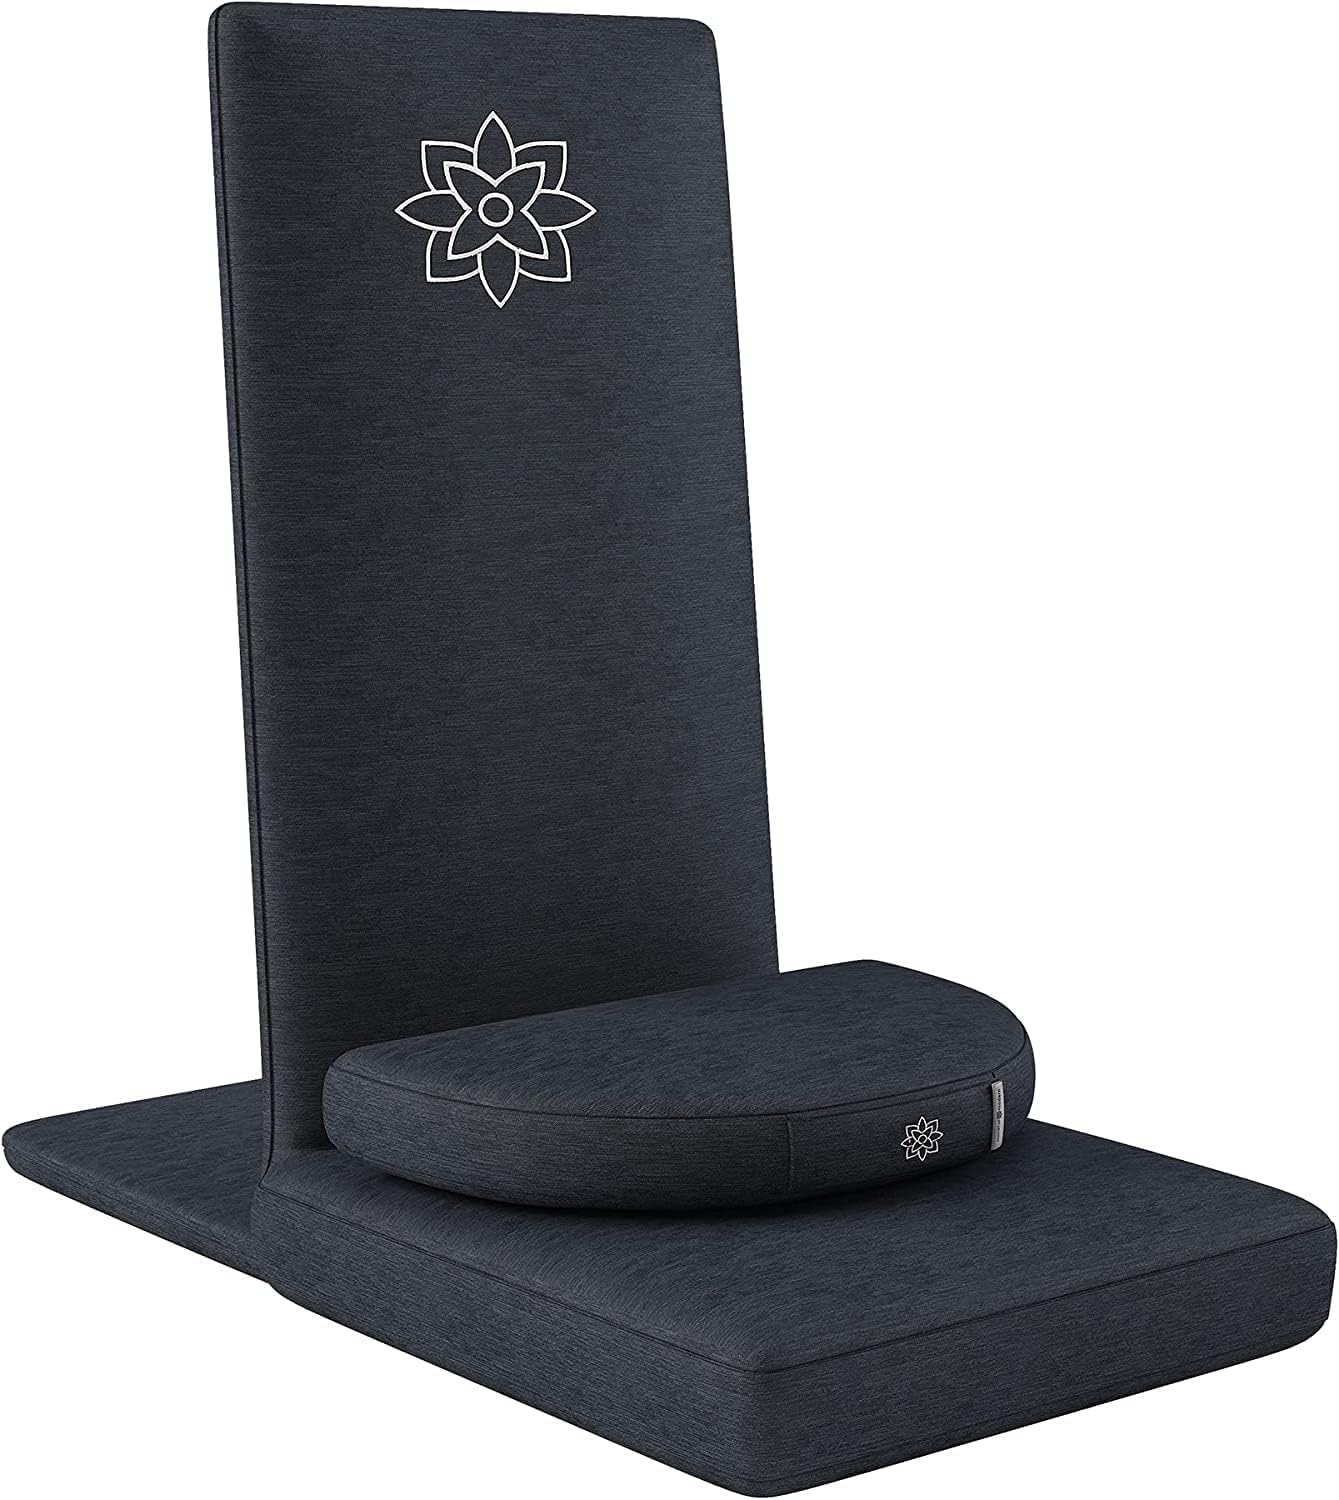 Mindful Modern Folding Pro Meditation Chair - Adjustable Meditation Seat with Back Support and Bonus Buckwheat Meditation Cushion - Comfortable Mindfulness Living Room Floor Chair